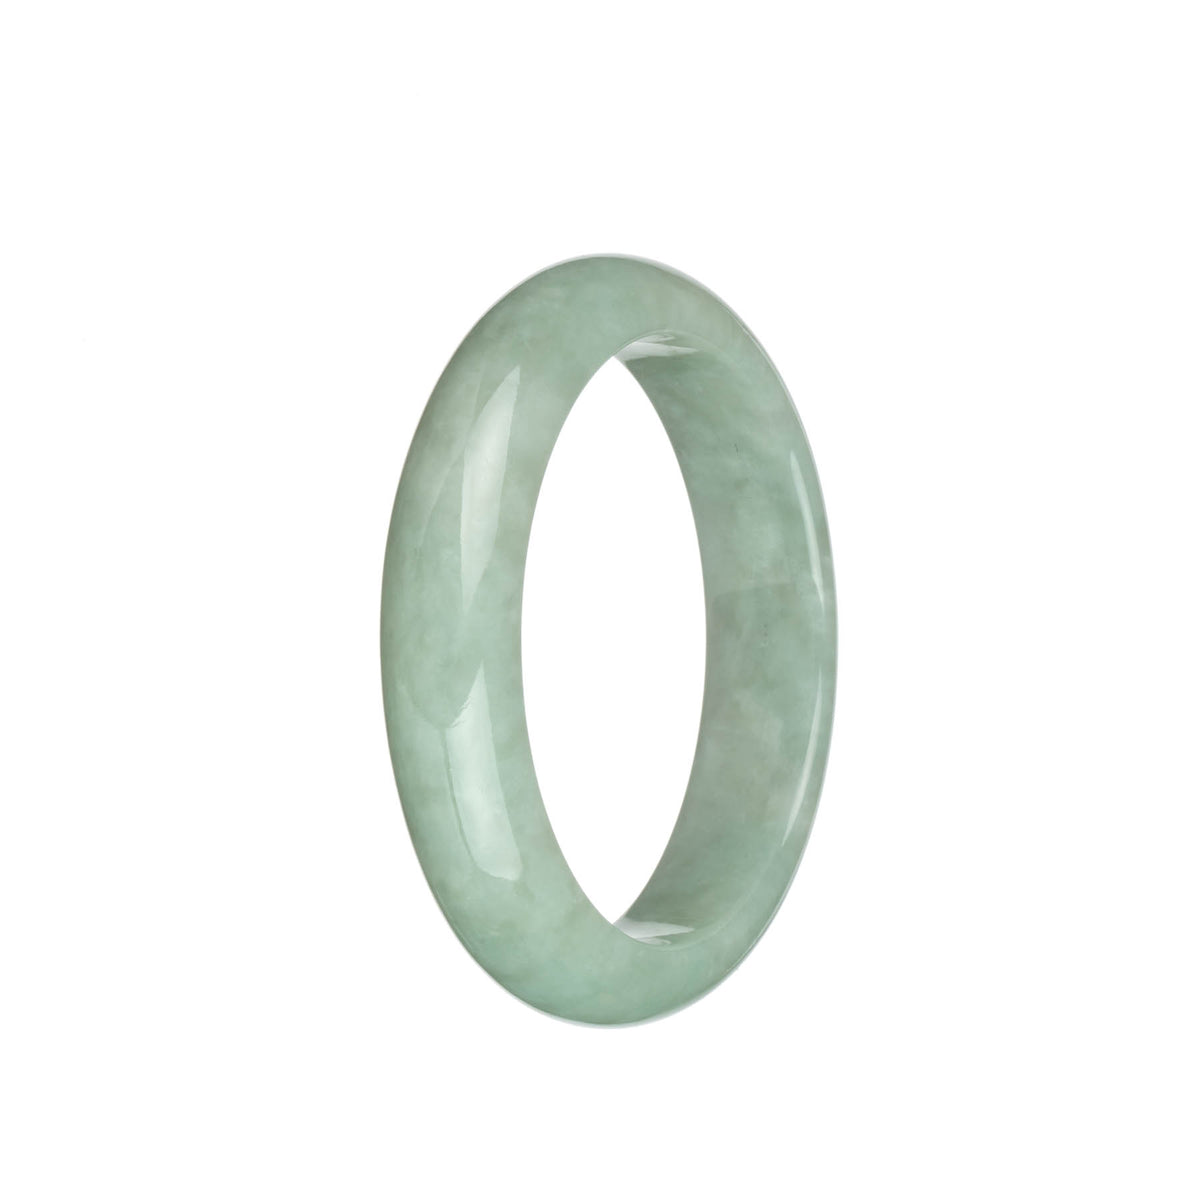 Genuine Grade A Pale Green Burma Jade Bracelet - 58mm Half Moon